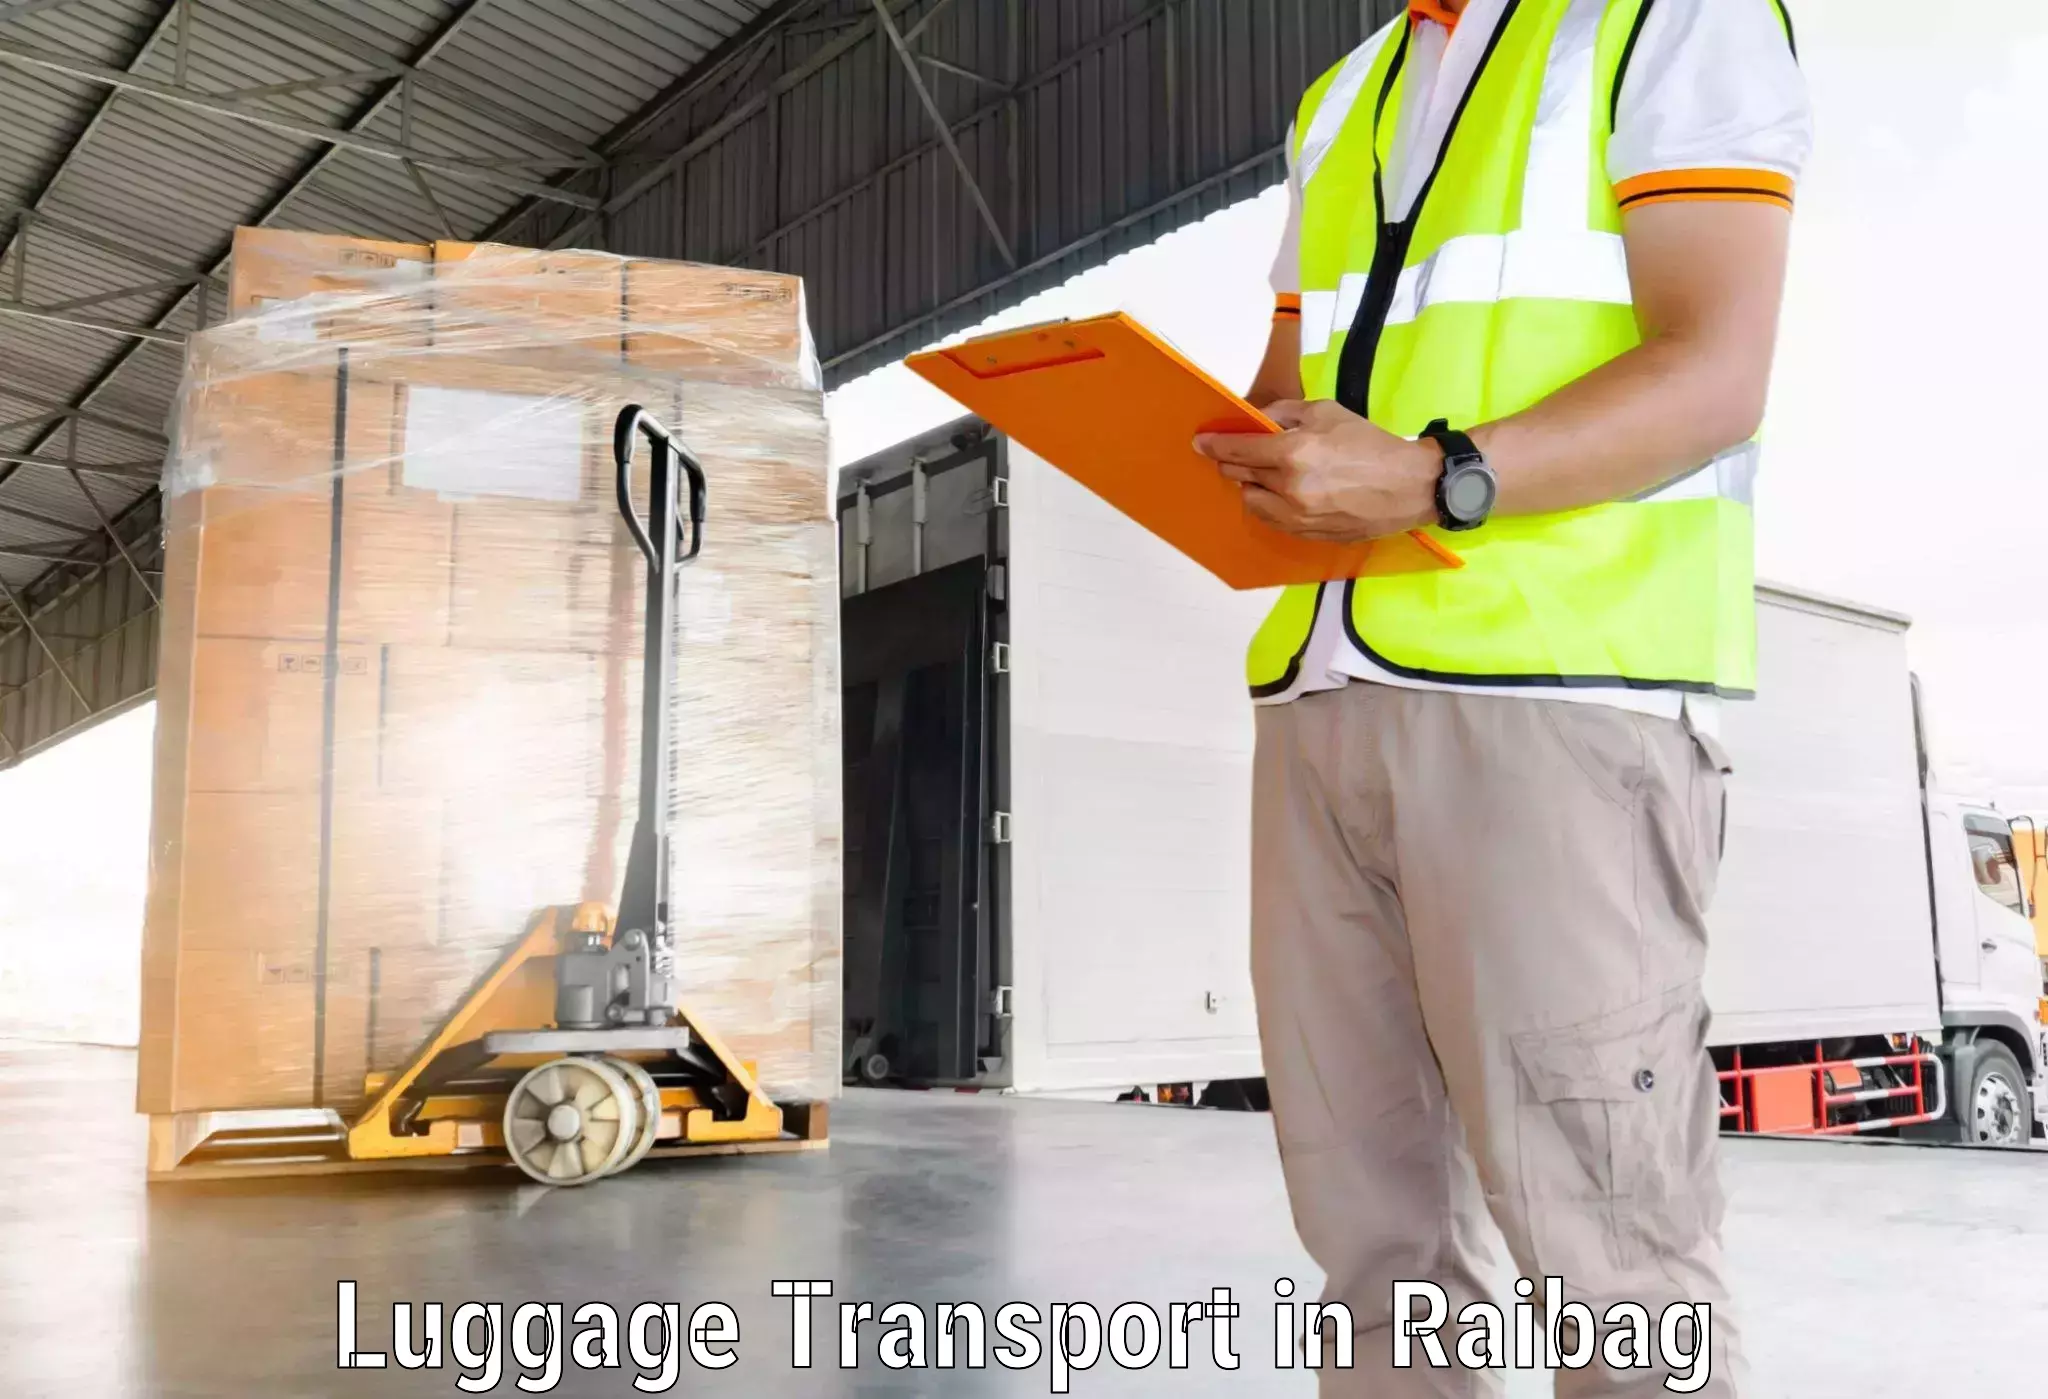 Baggage transport innovation in Raibag